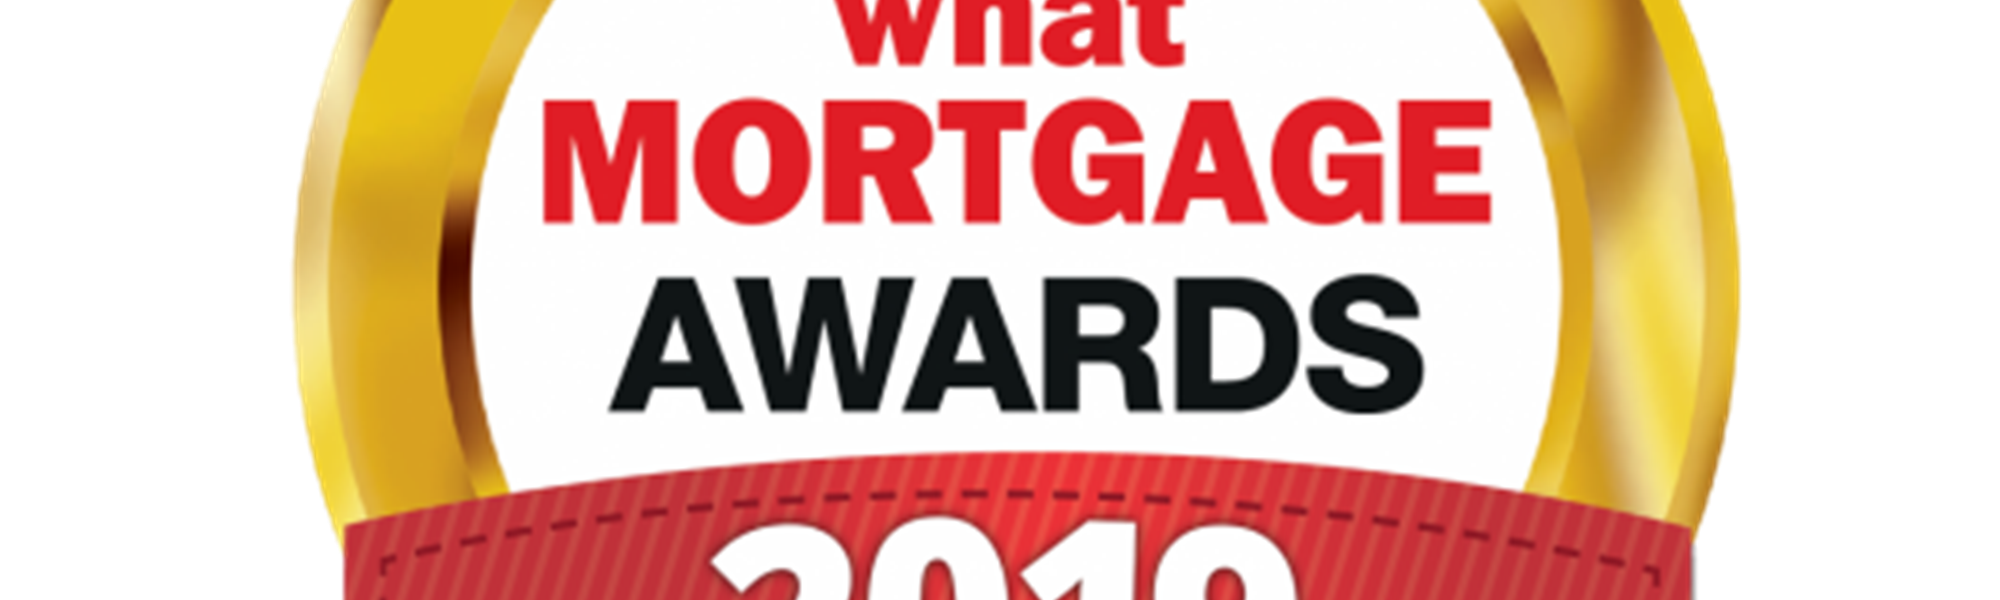 Background image: What Mortgage Awards 2019